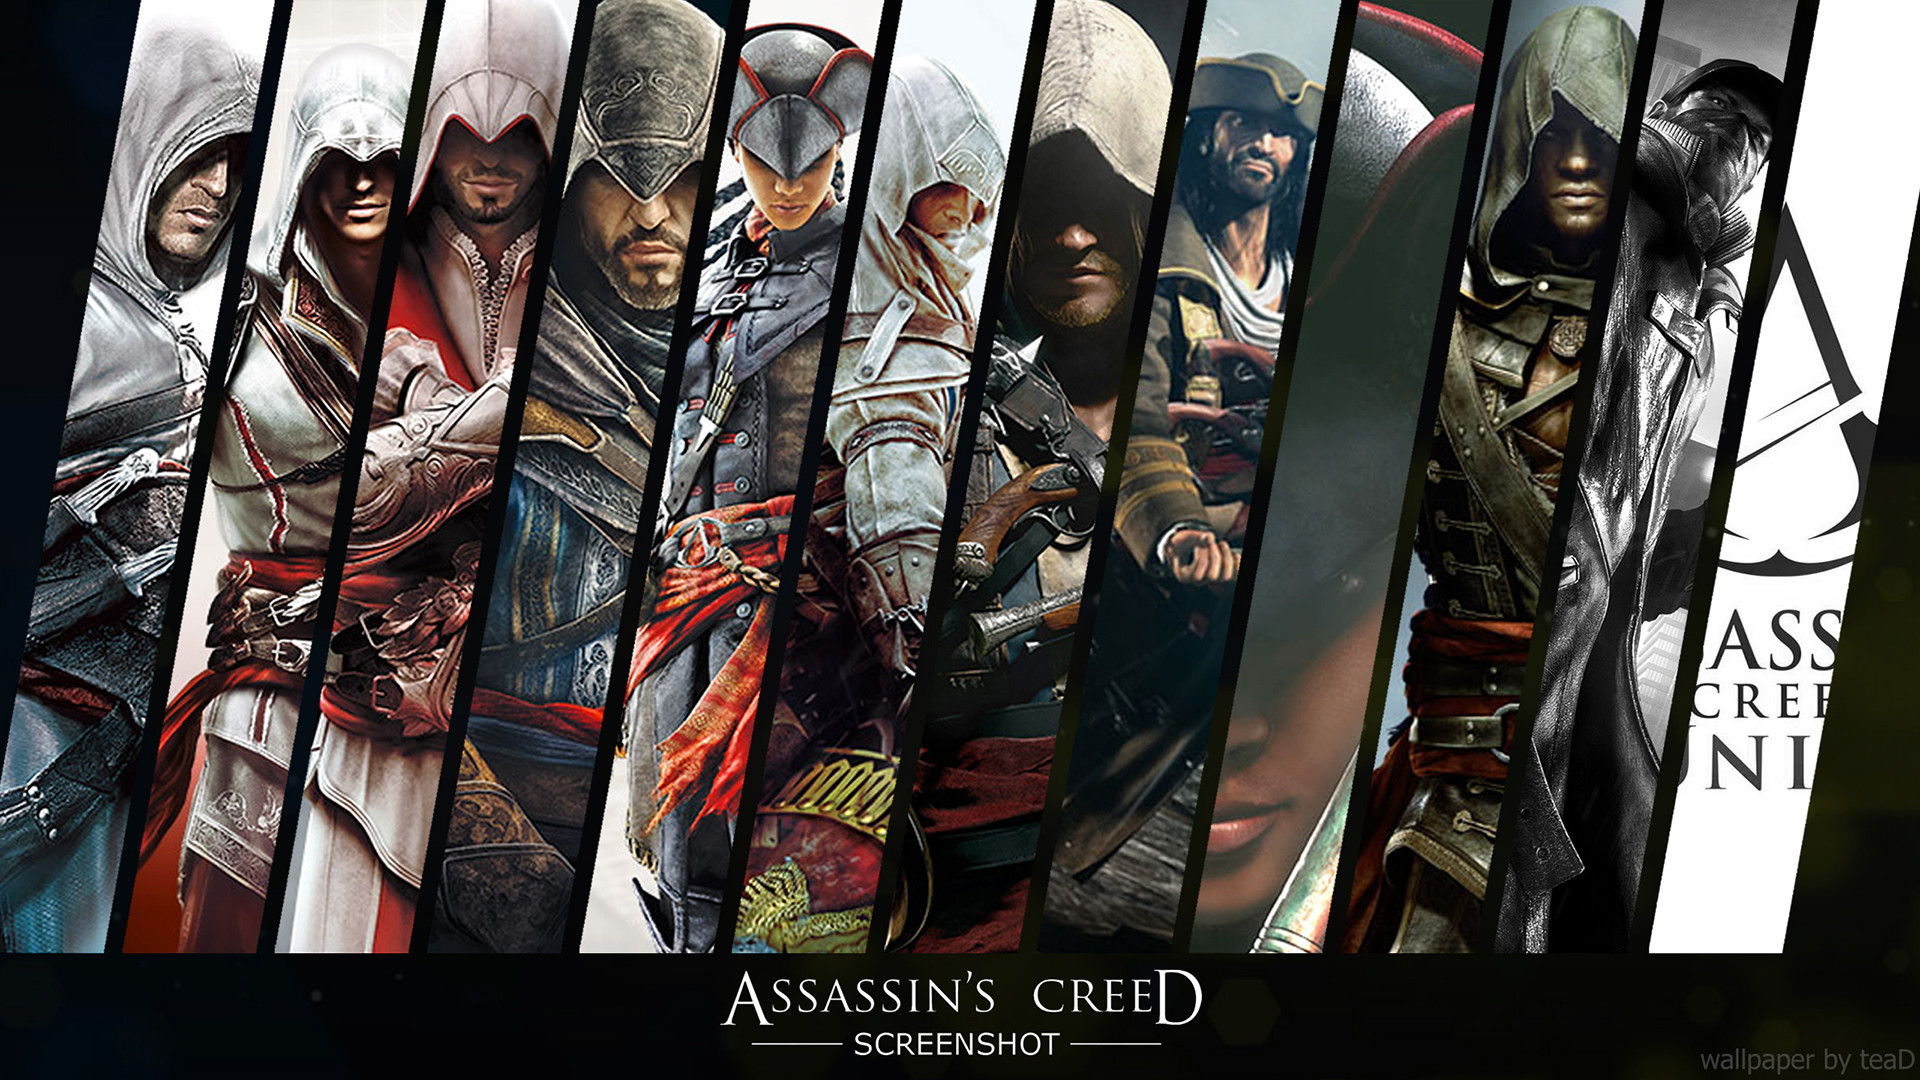 1920x1080 Assassins Creed Screenshot promo wallpaper by santap555